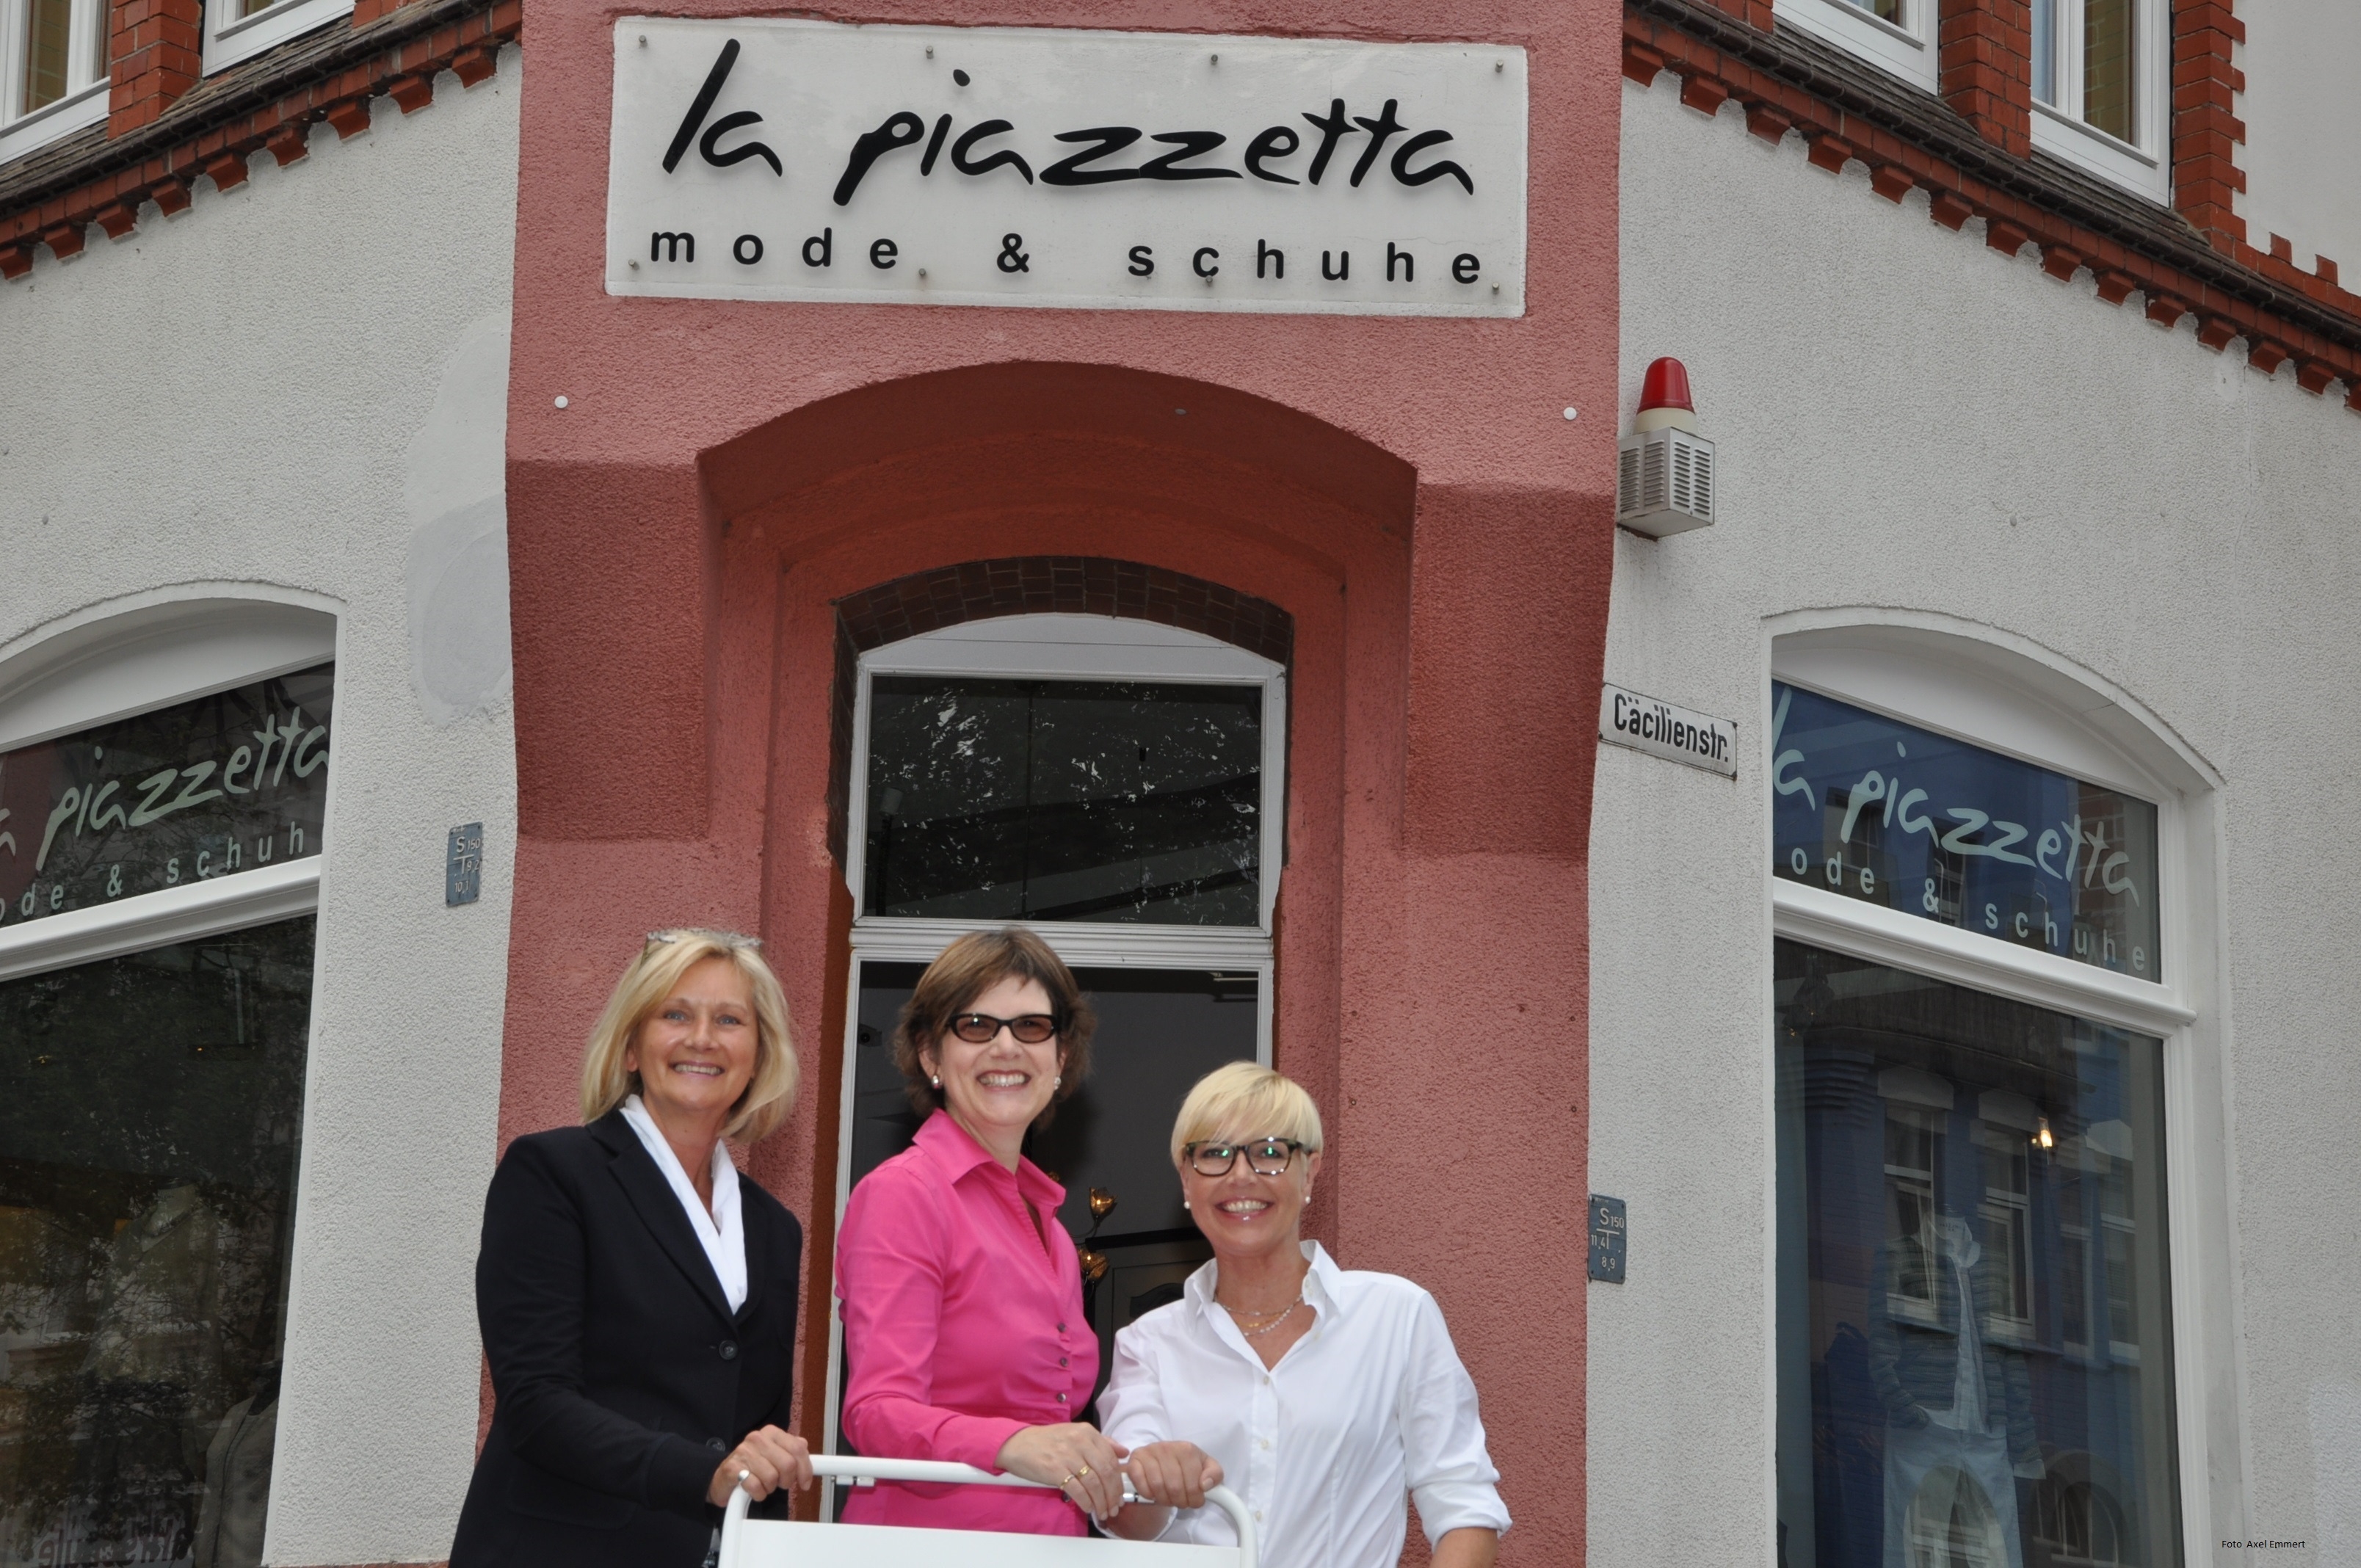 Bilder La Piazzetta- Mode & Schuhe